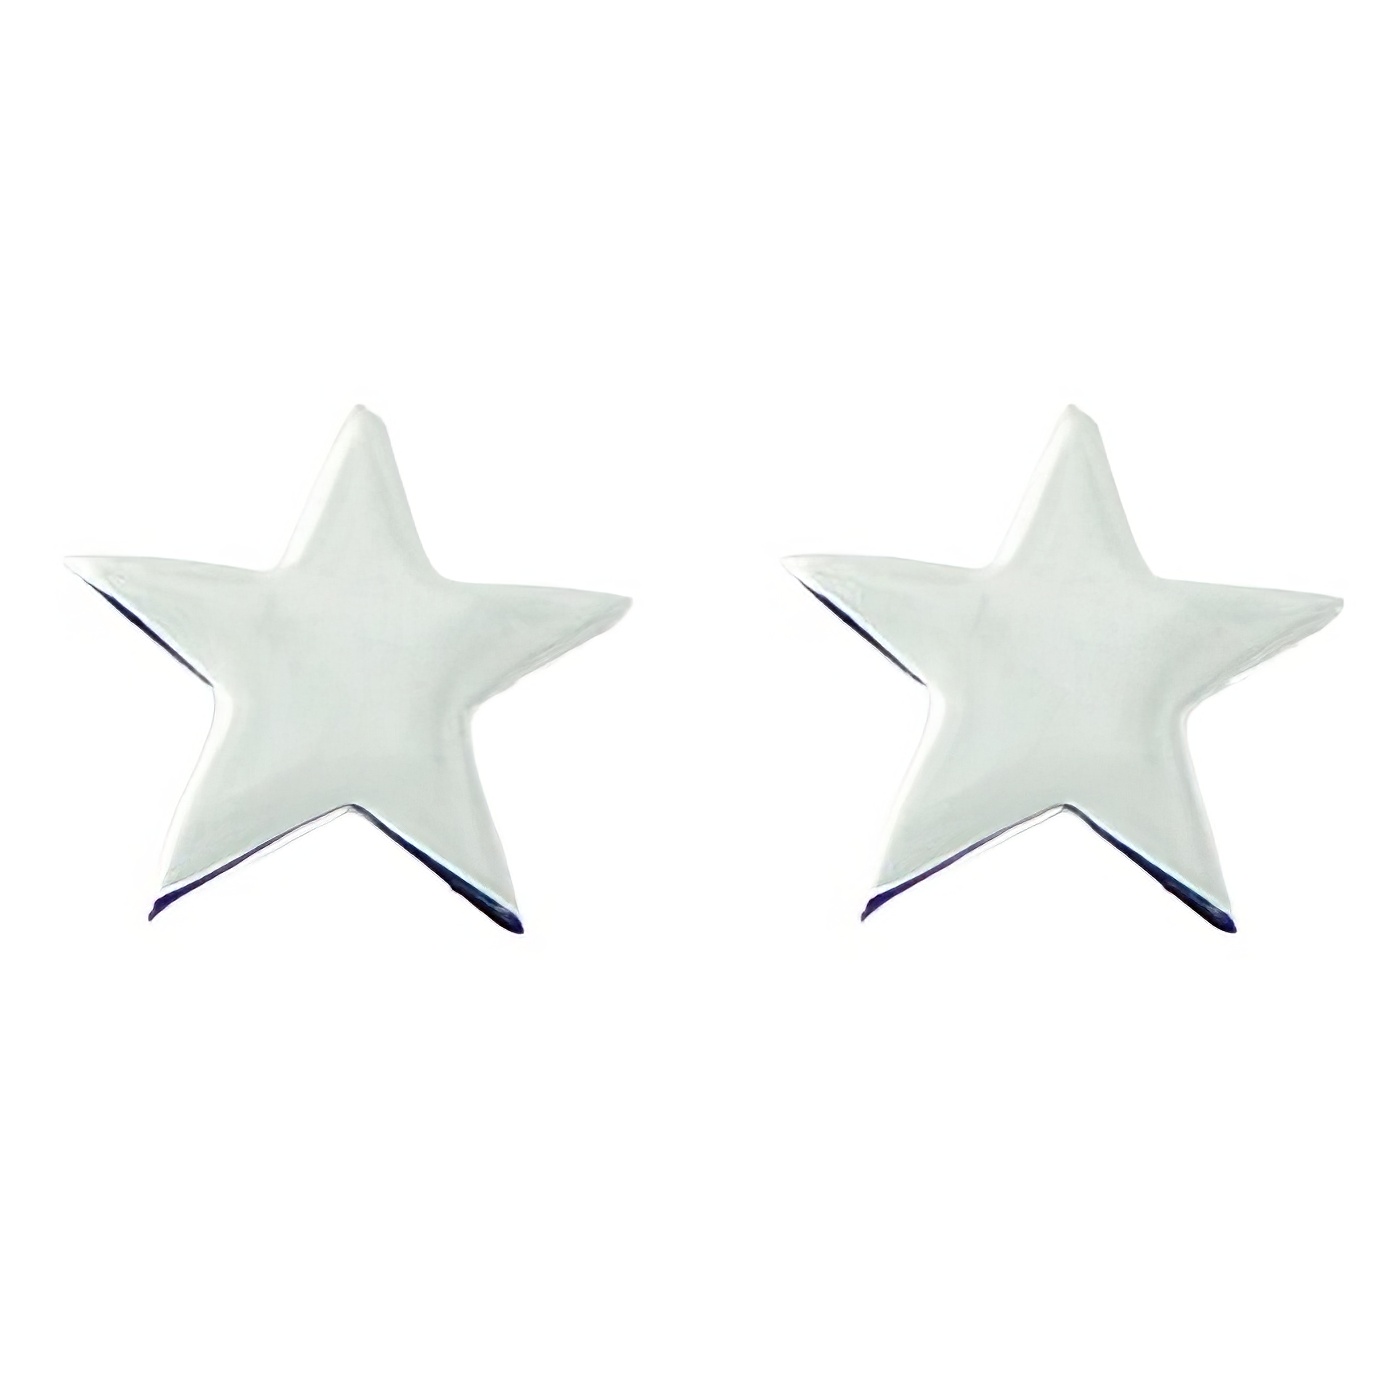 Polished Sterling Silver Star Stud Earrings by BeYindi 